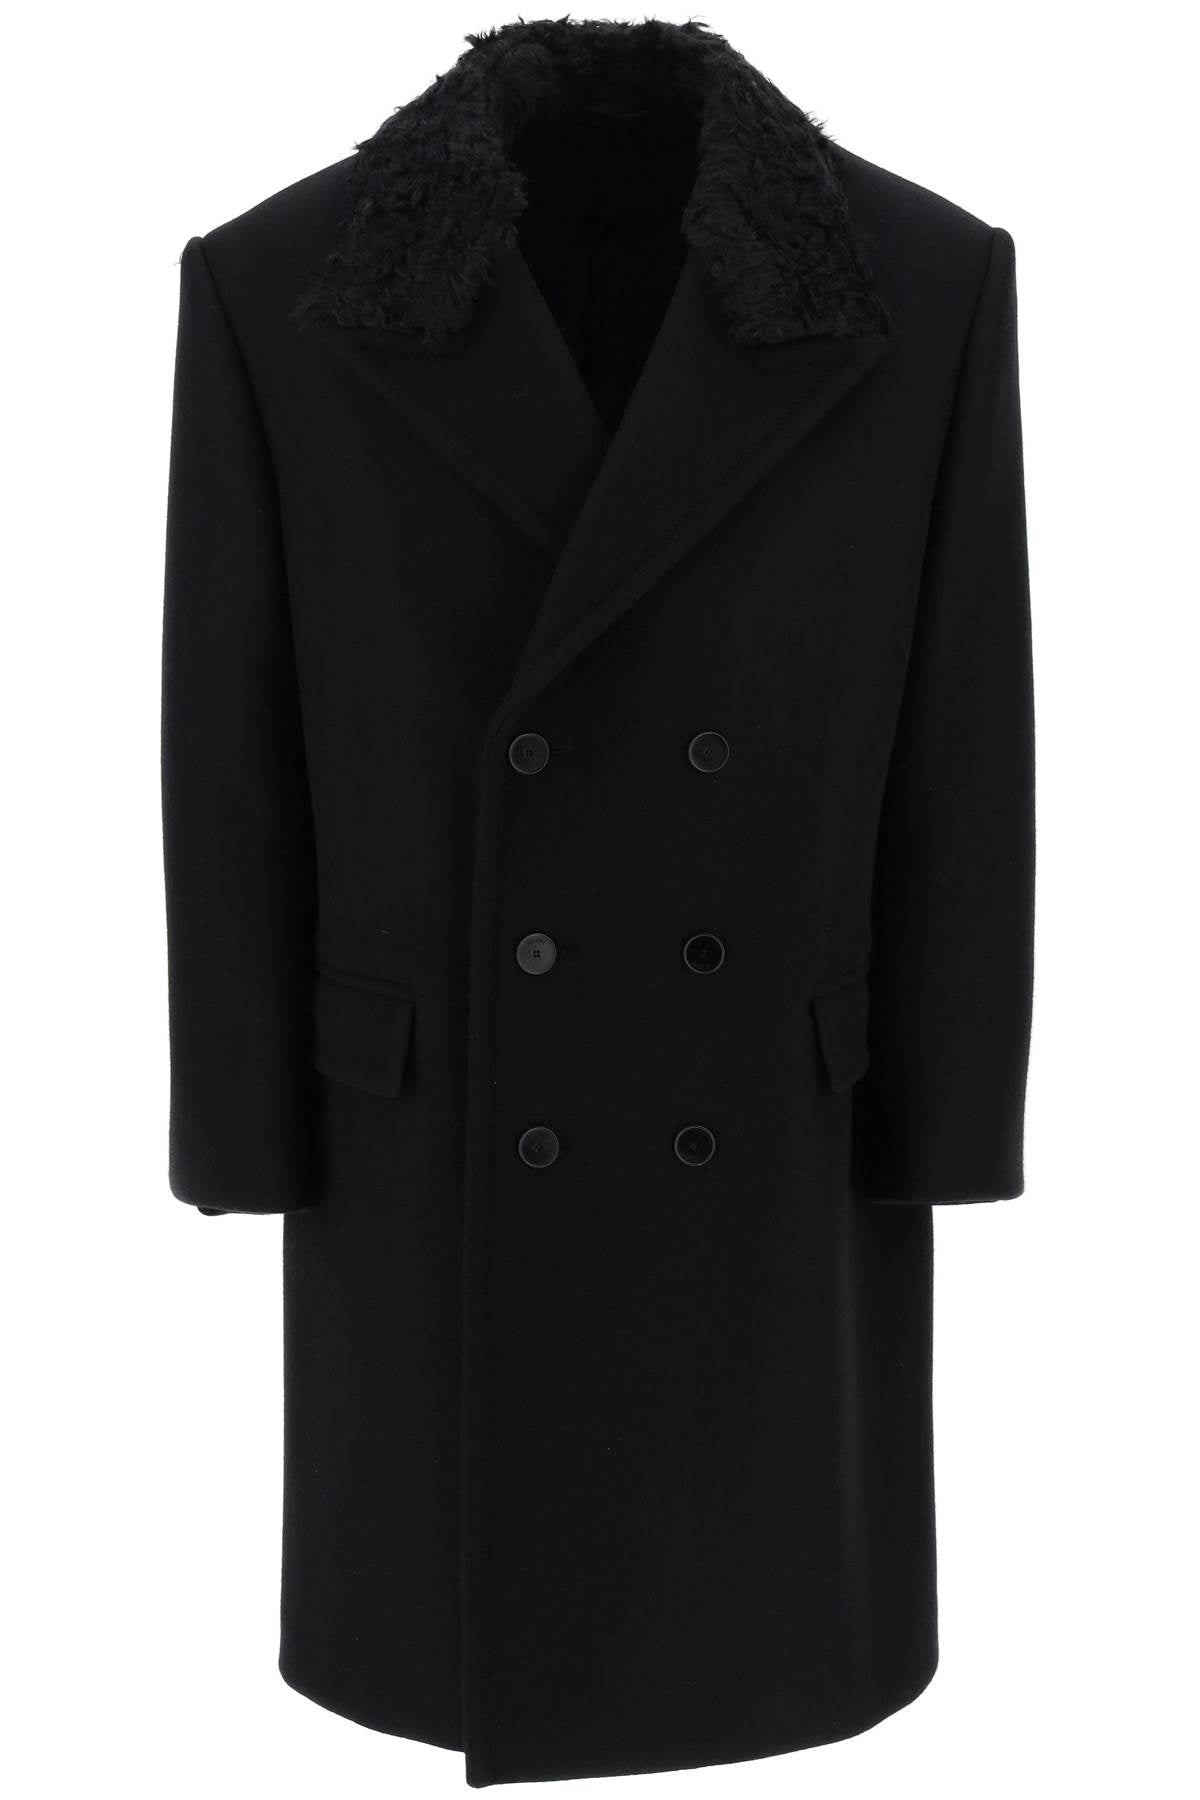 Lanvin wool oversize coat